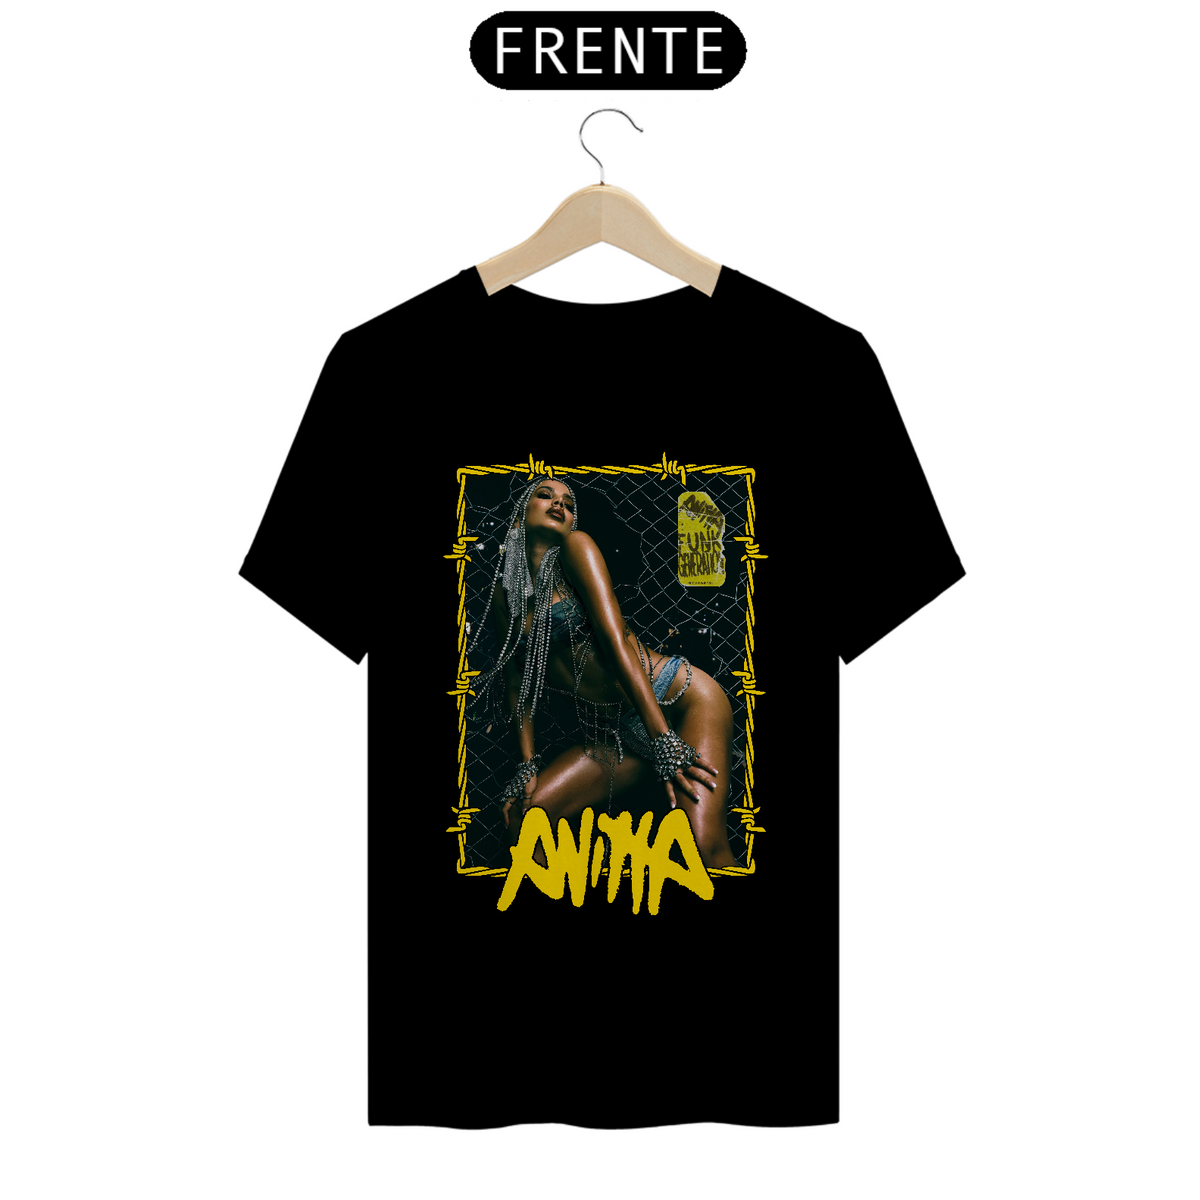 Nome do produto: Camiseta Anitta - Funk Generation Cover